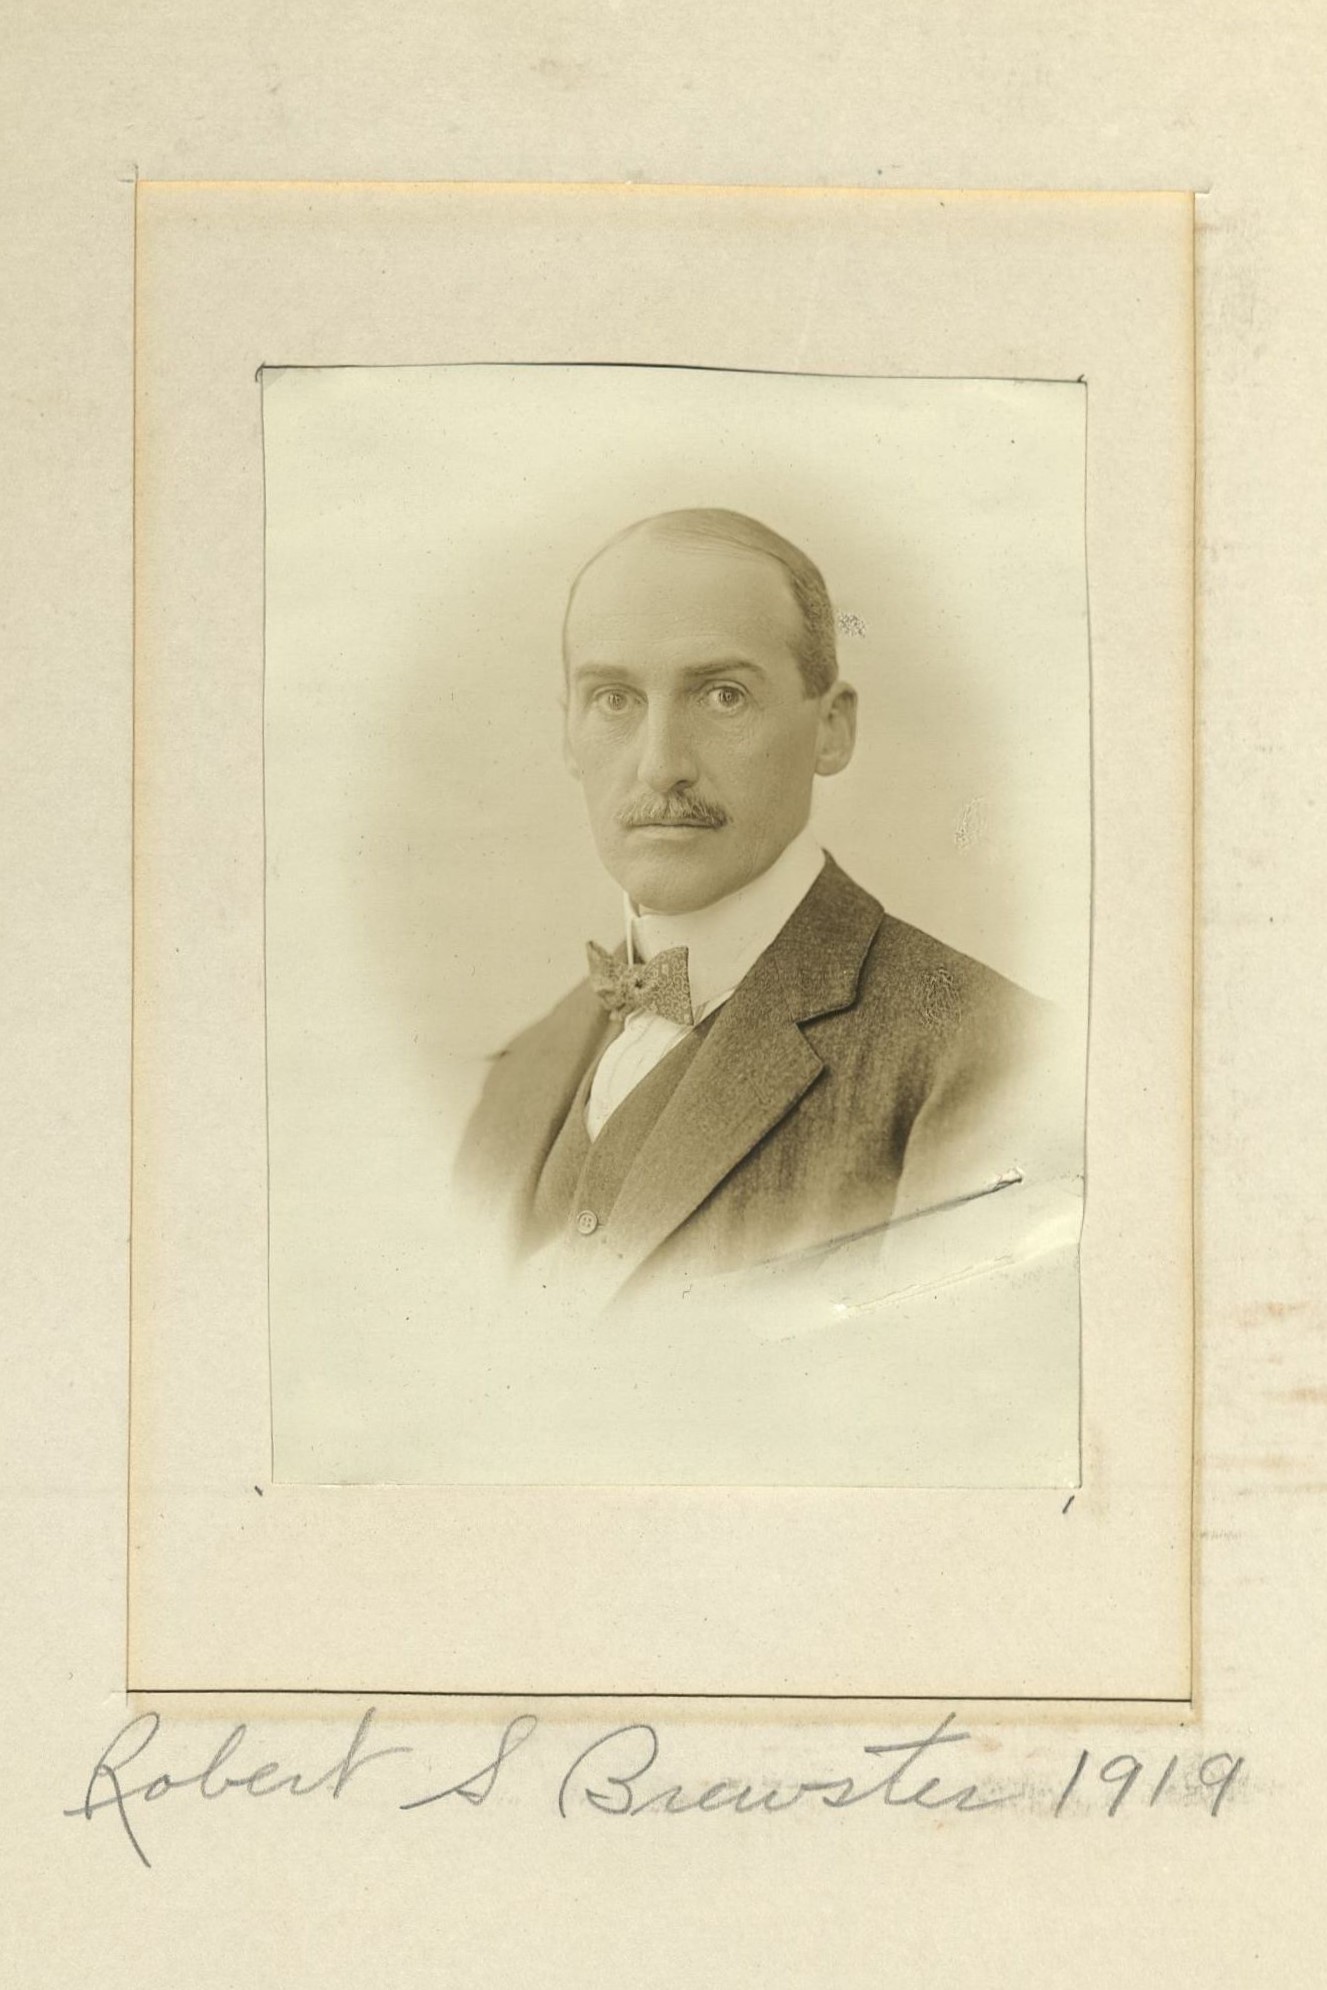 Member portrait of Robert S. Brewster